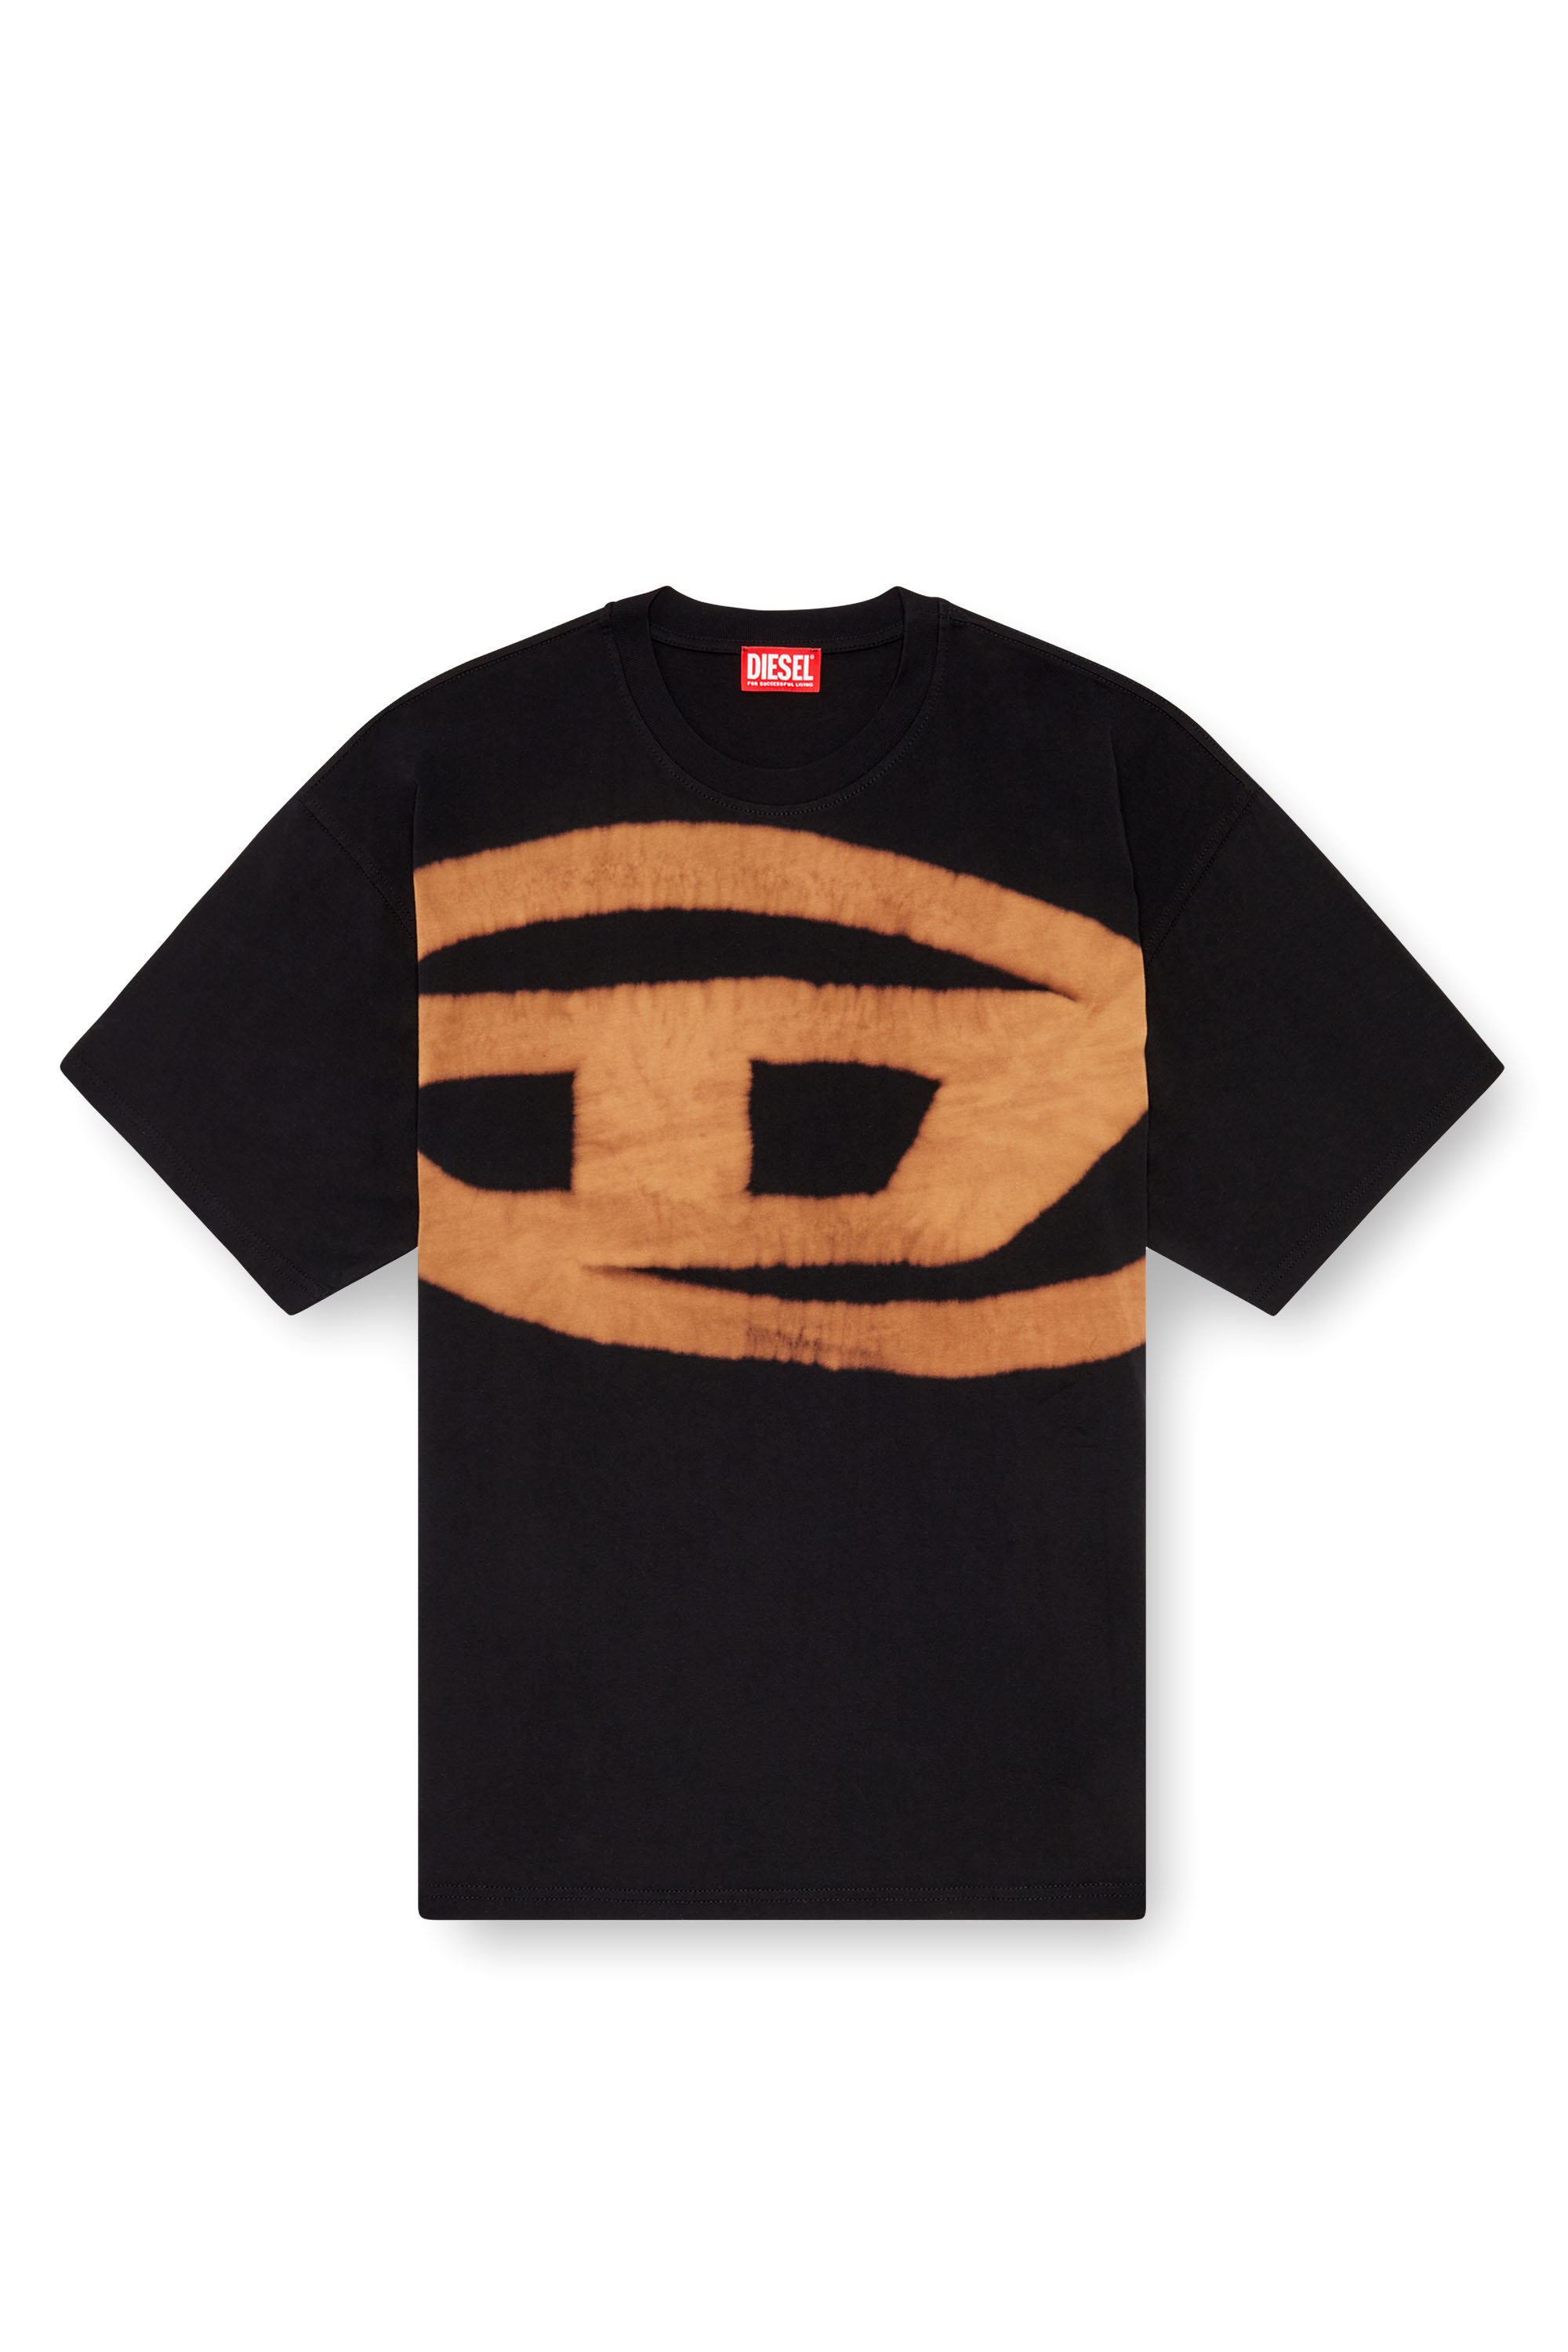 Diesel - T-BOXT-BLEACH, Homme T-shirt avec logo Oval D effet blanchi in Polychrome - Image 3